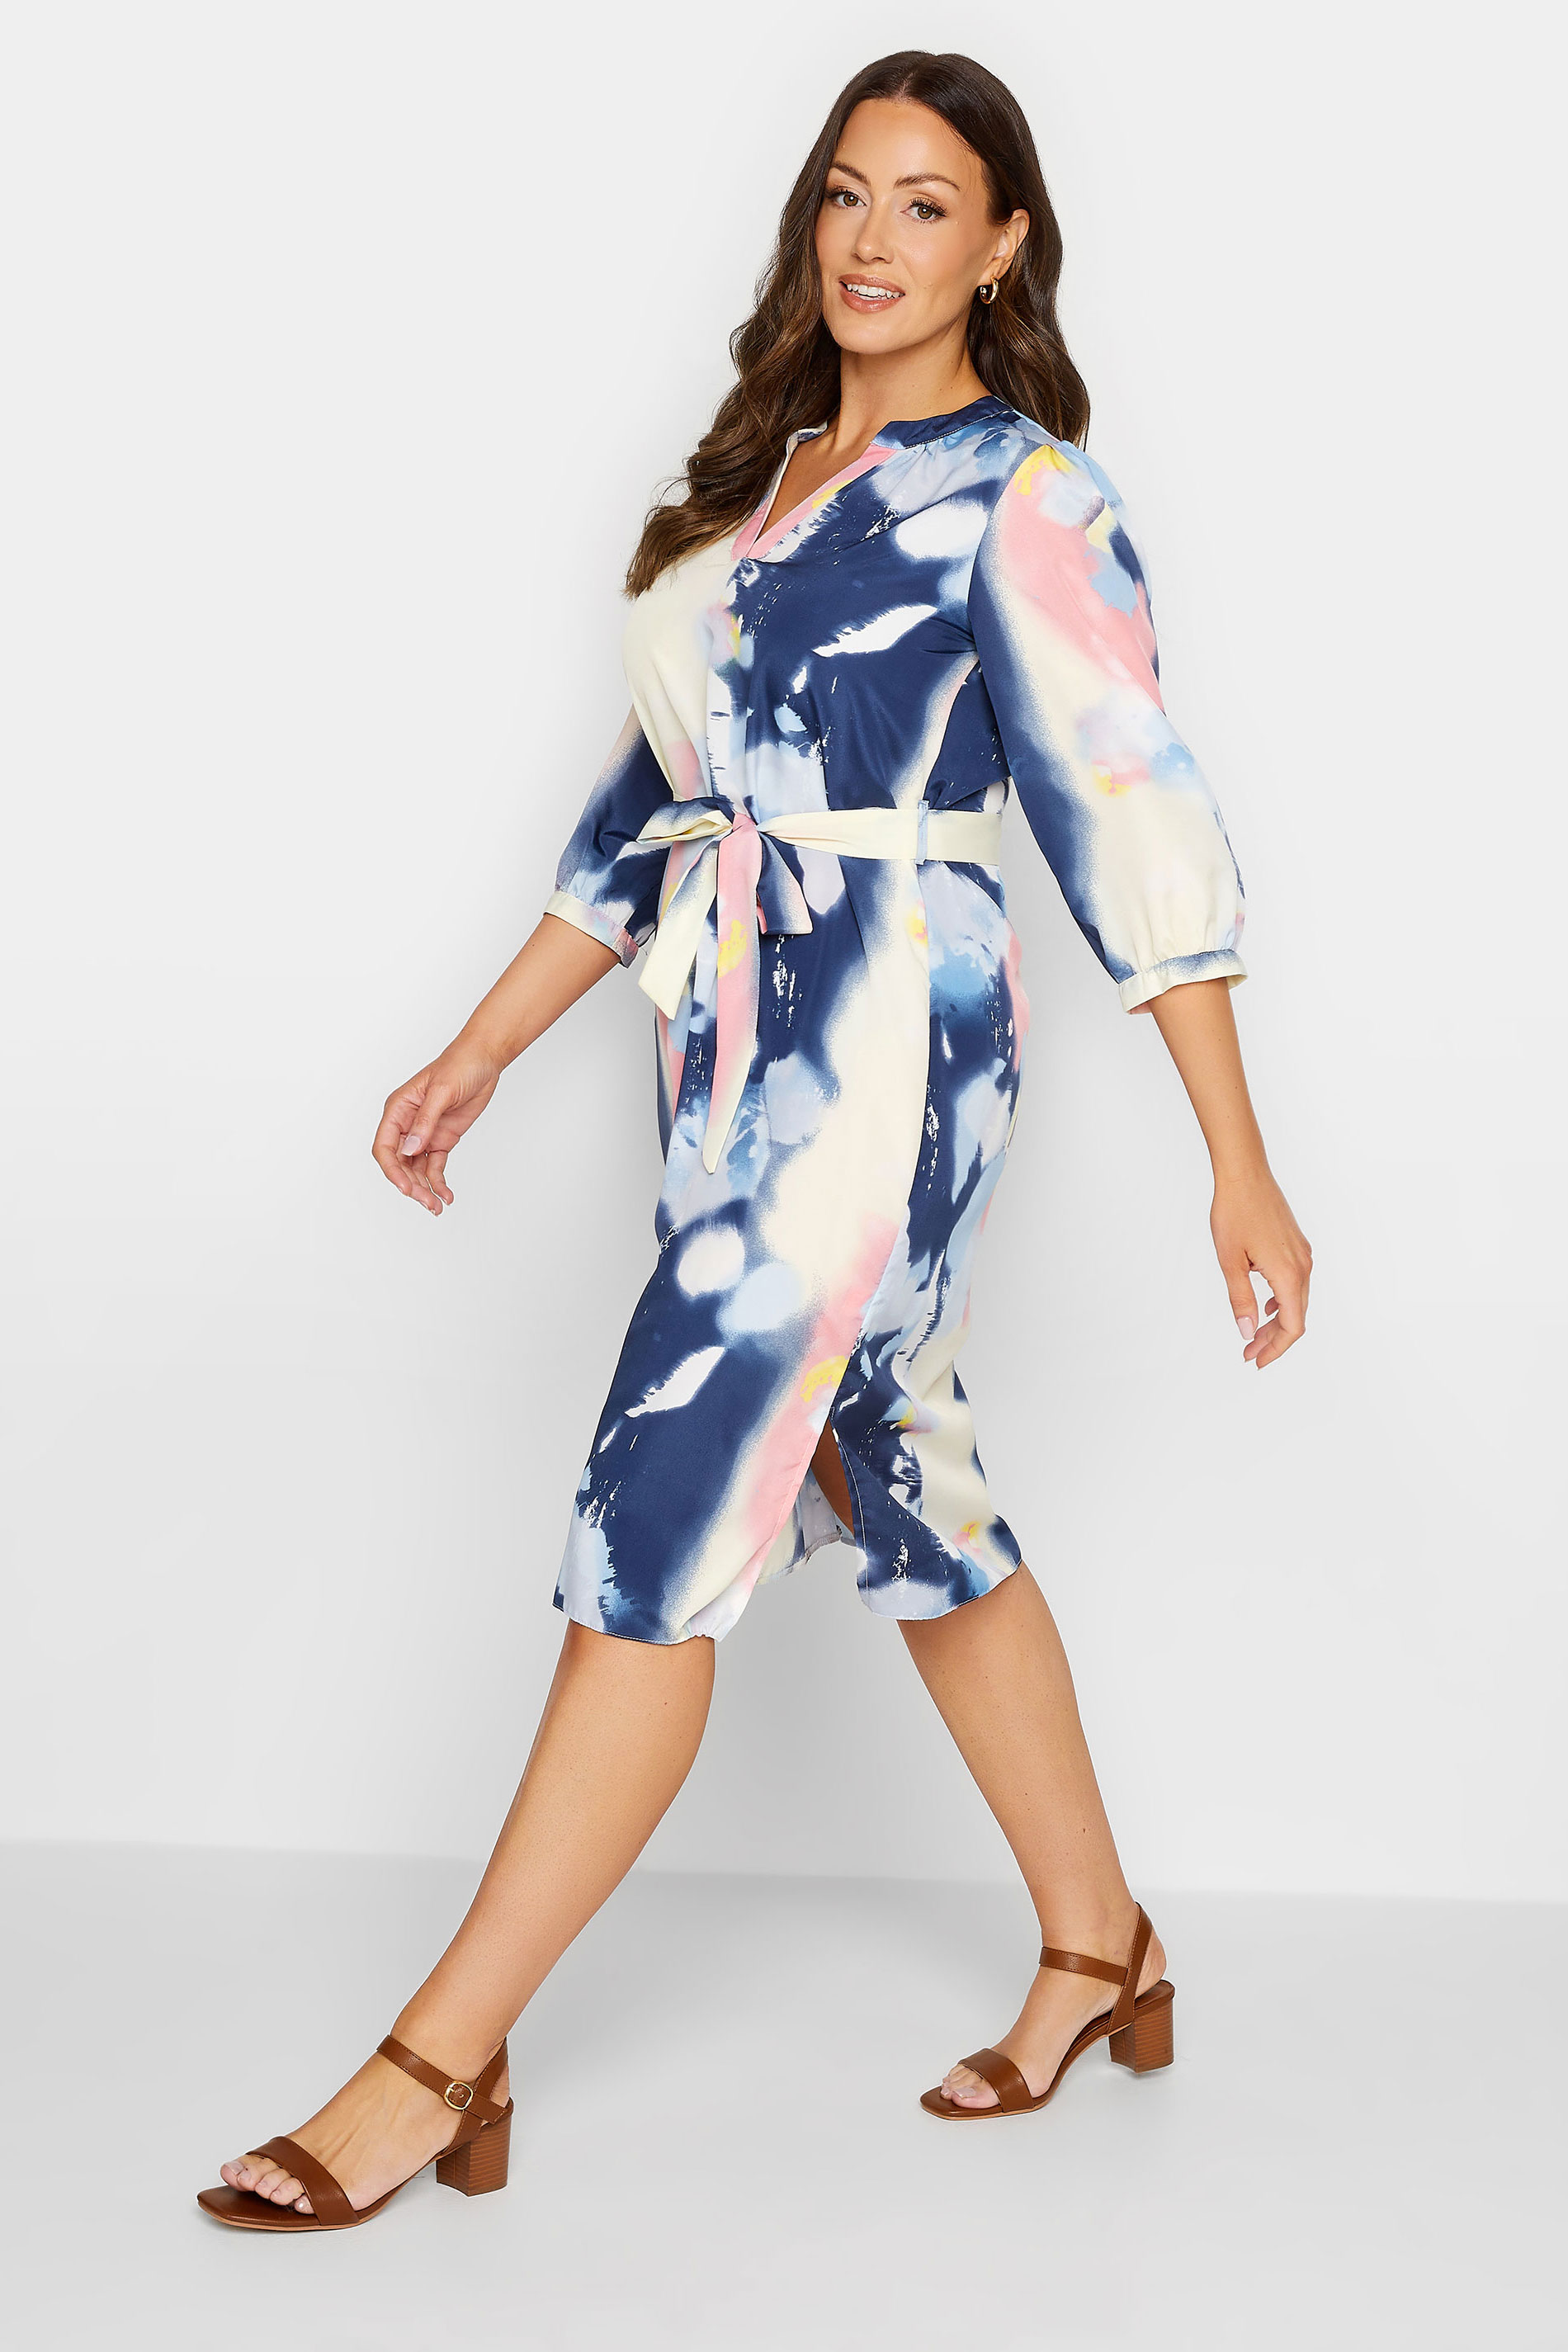 M&Co Blue Abstract Print Tie Waist Tunic Dress | M&Co 2